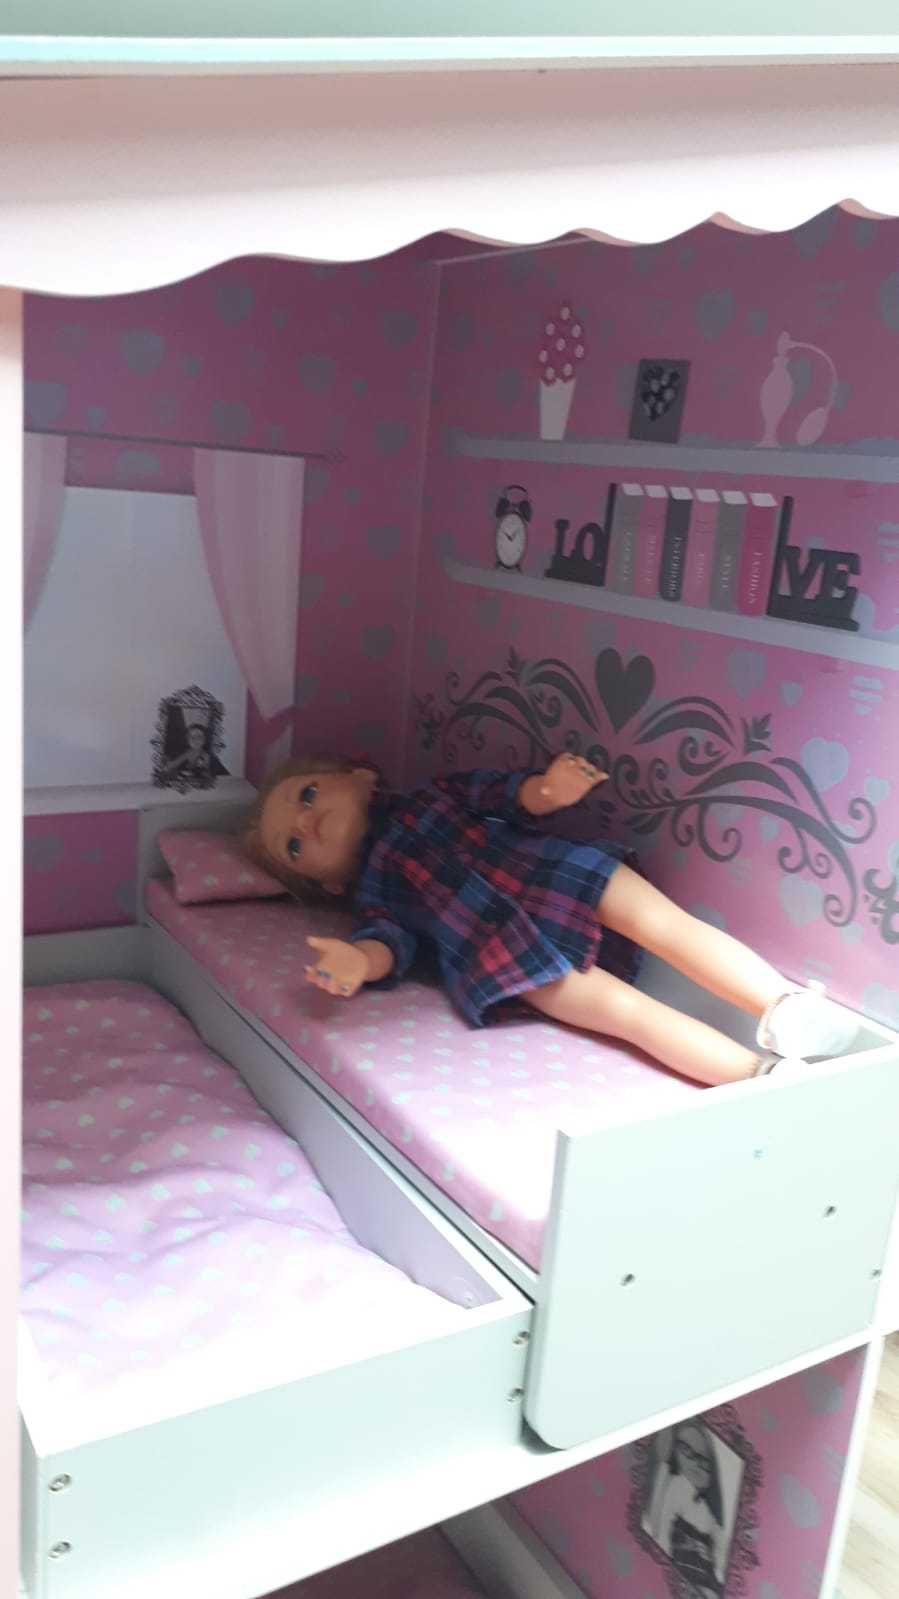 Domek dla lalek Designa Friend z dwoma lalkami